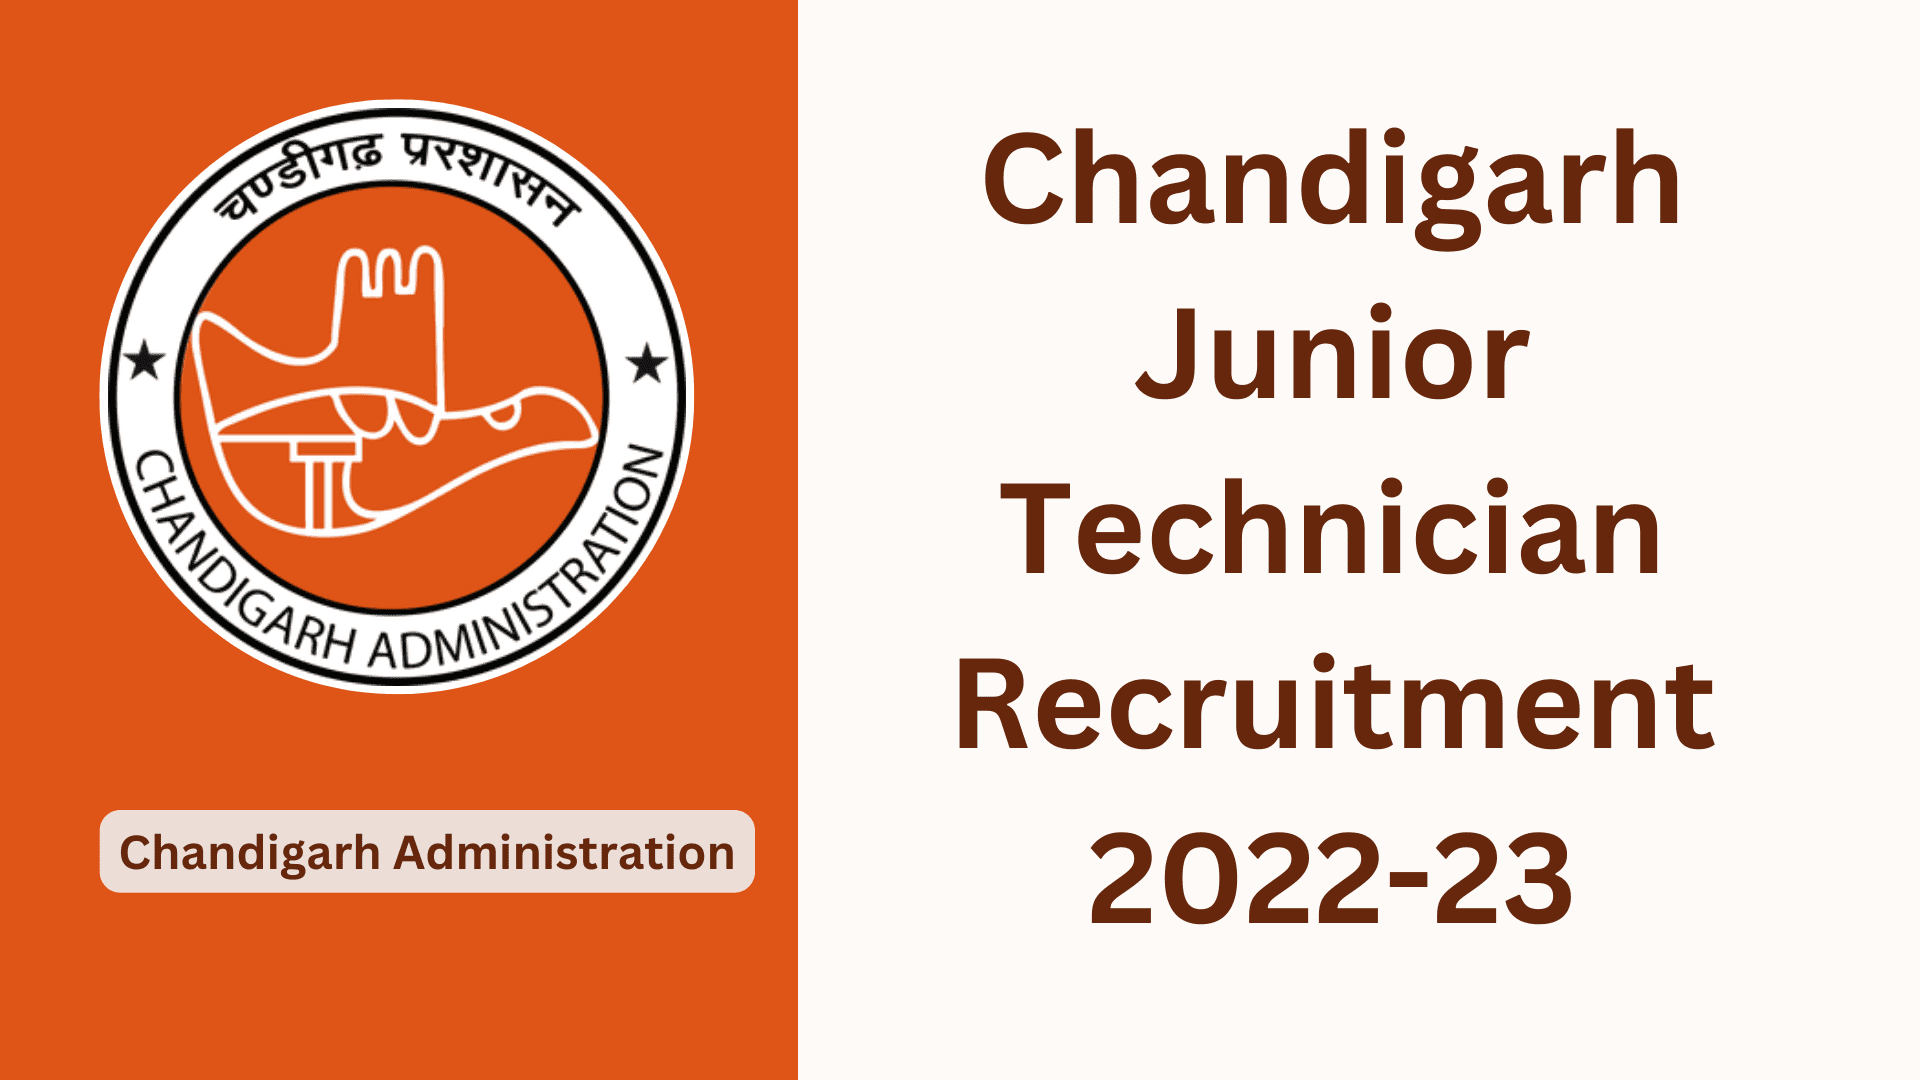 Chandigarh Junior Technician Recruitment 2022-23